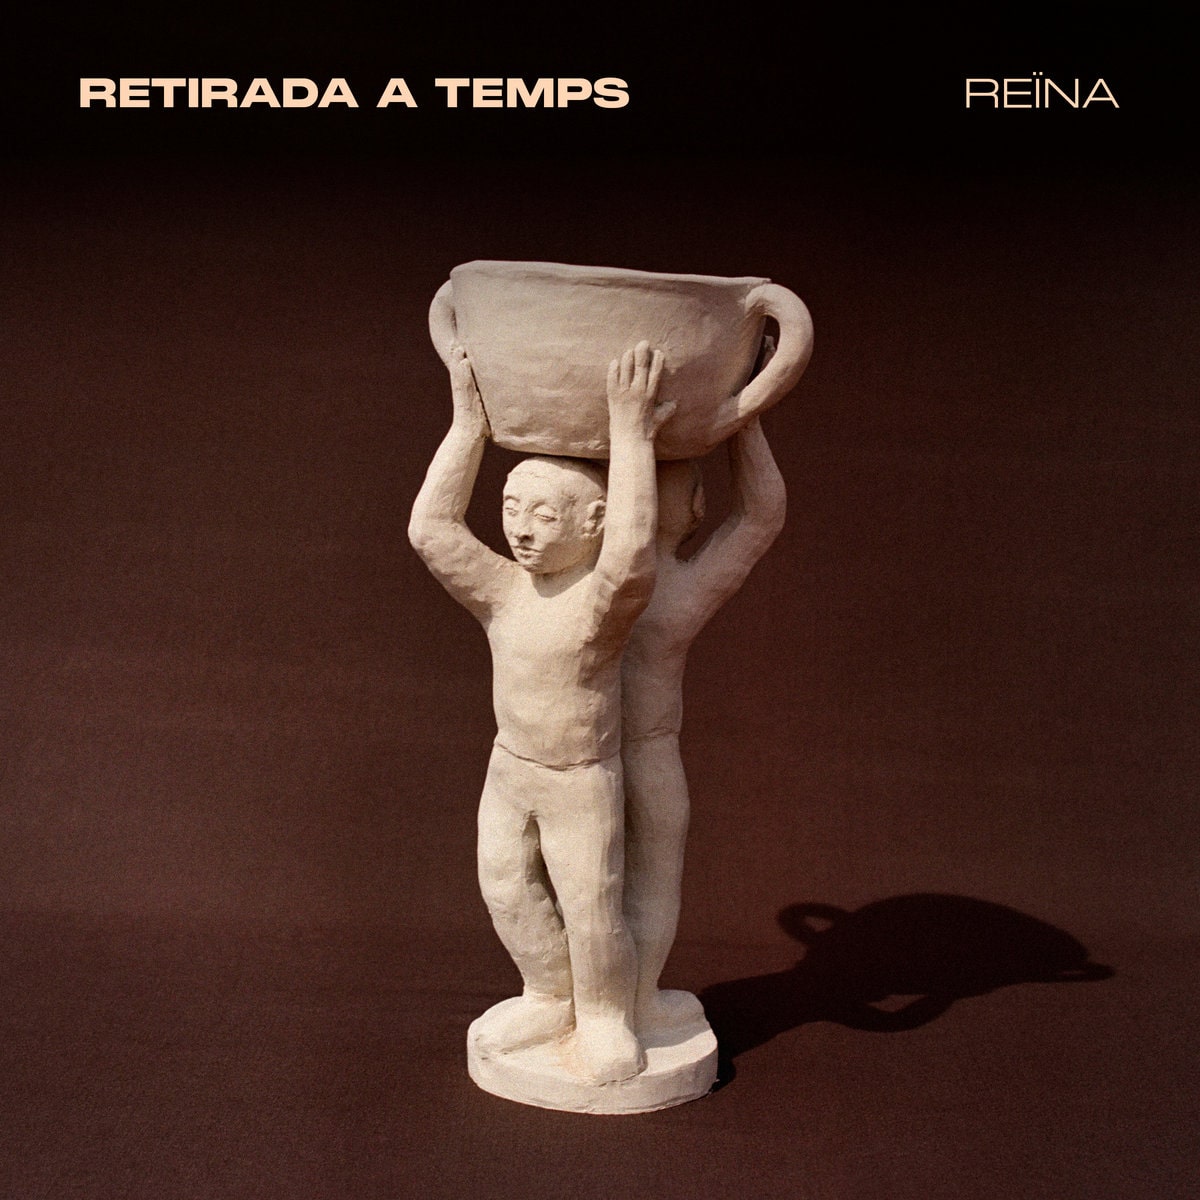 REINA (SPAIN) / レイナ / RETIRADA A TEMPS